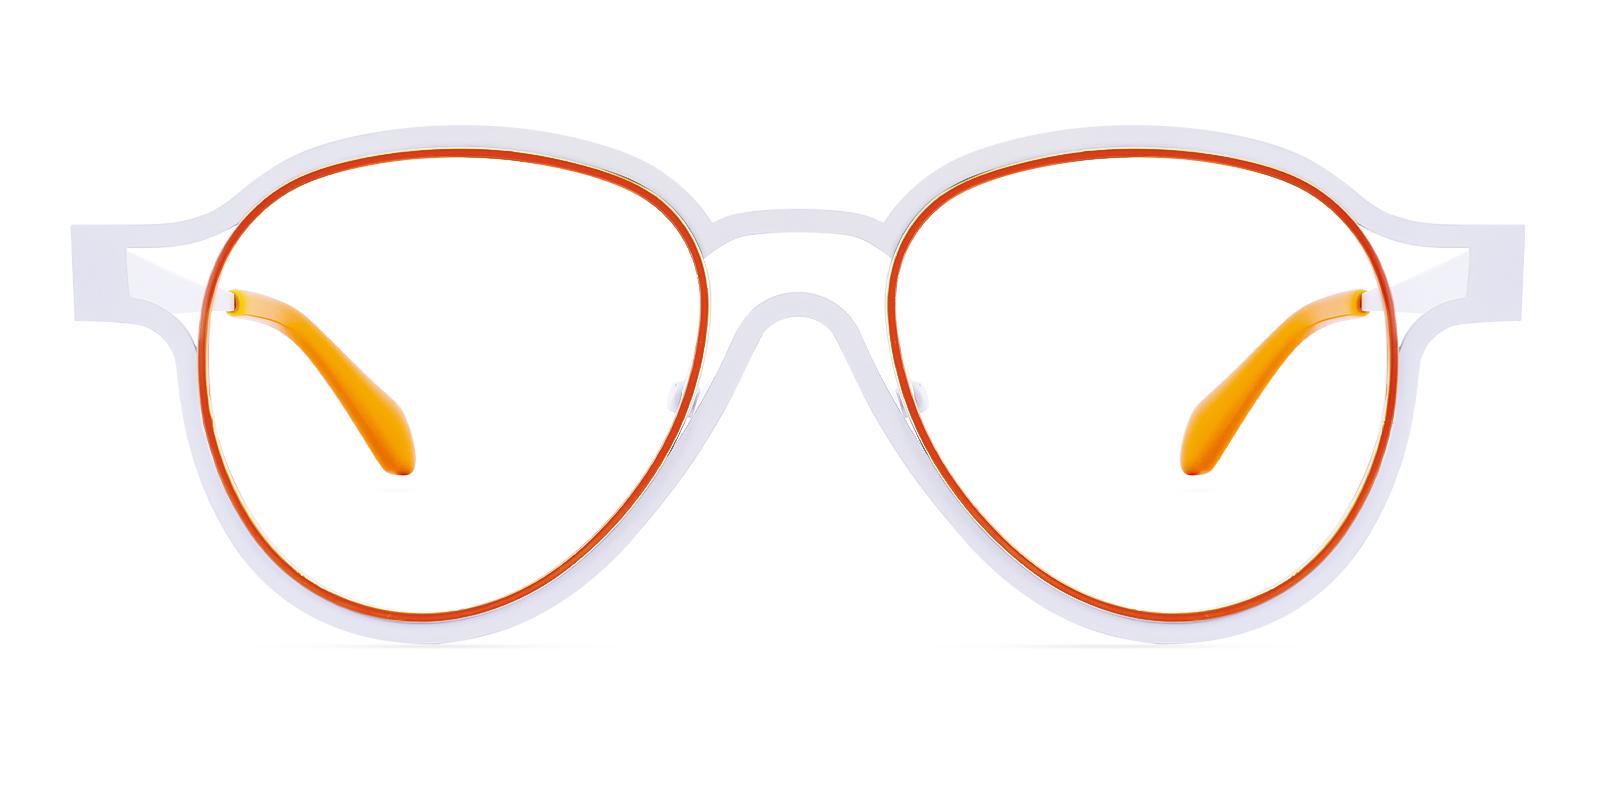 Mountly White Metal Eyeglasses , NosePads Frames from ABBE Glasses